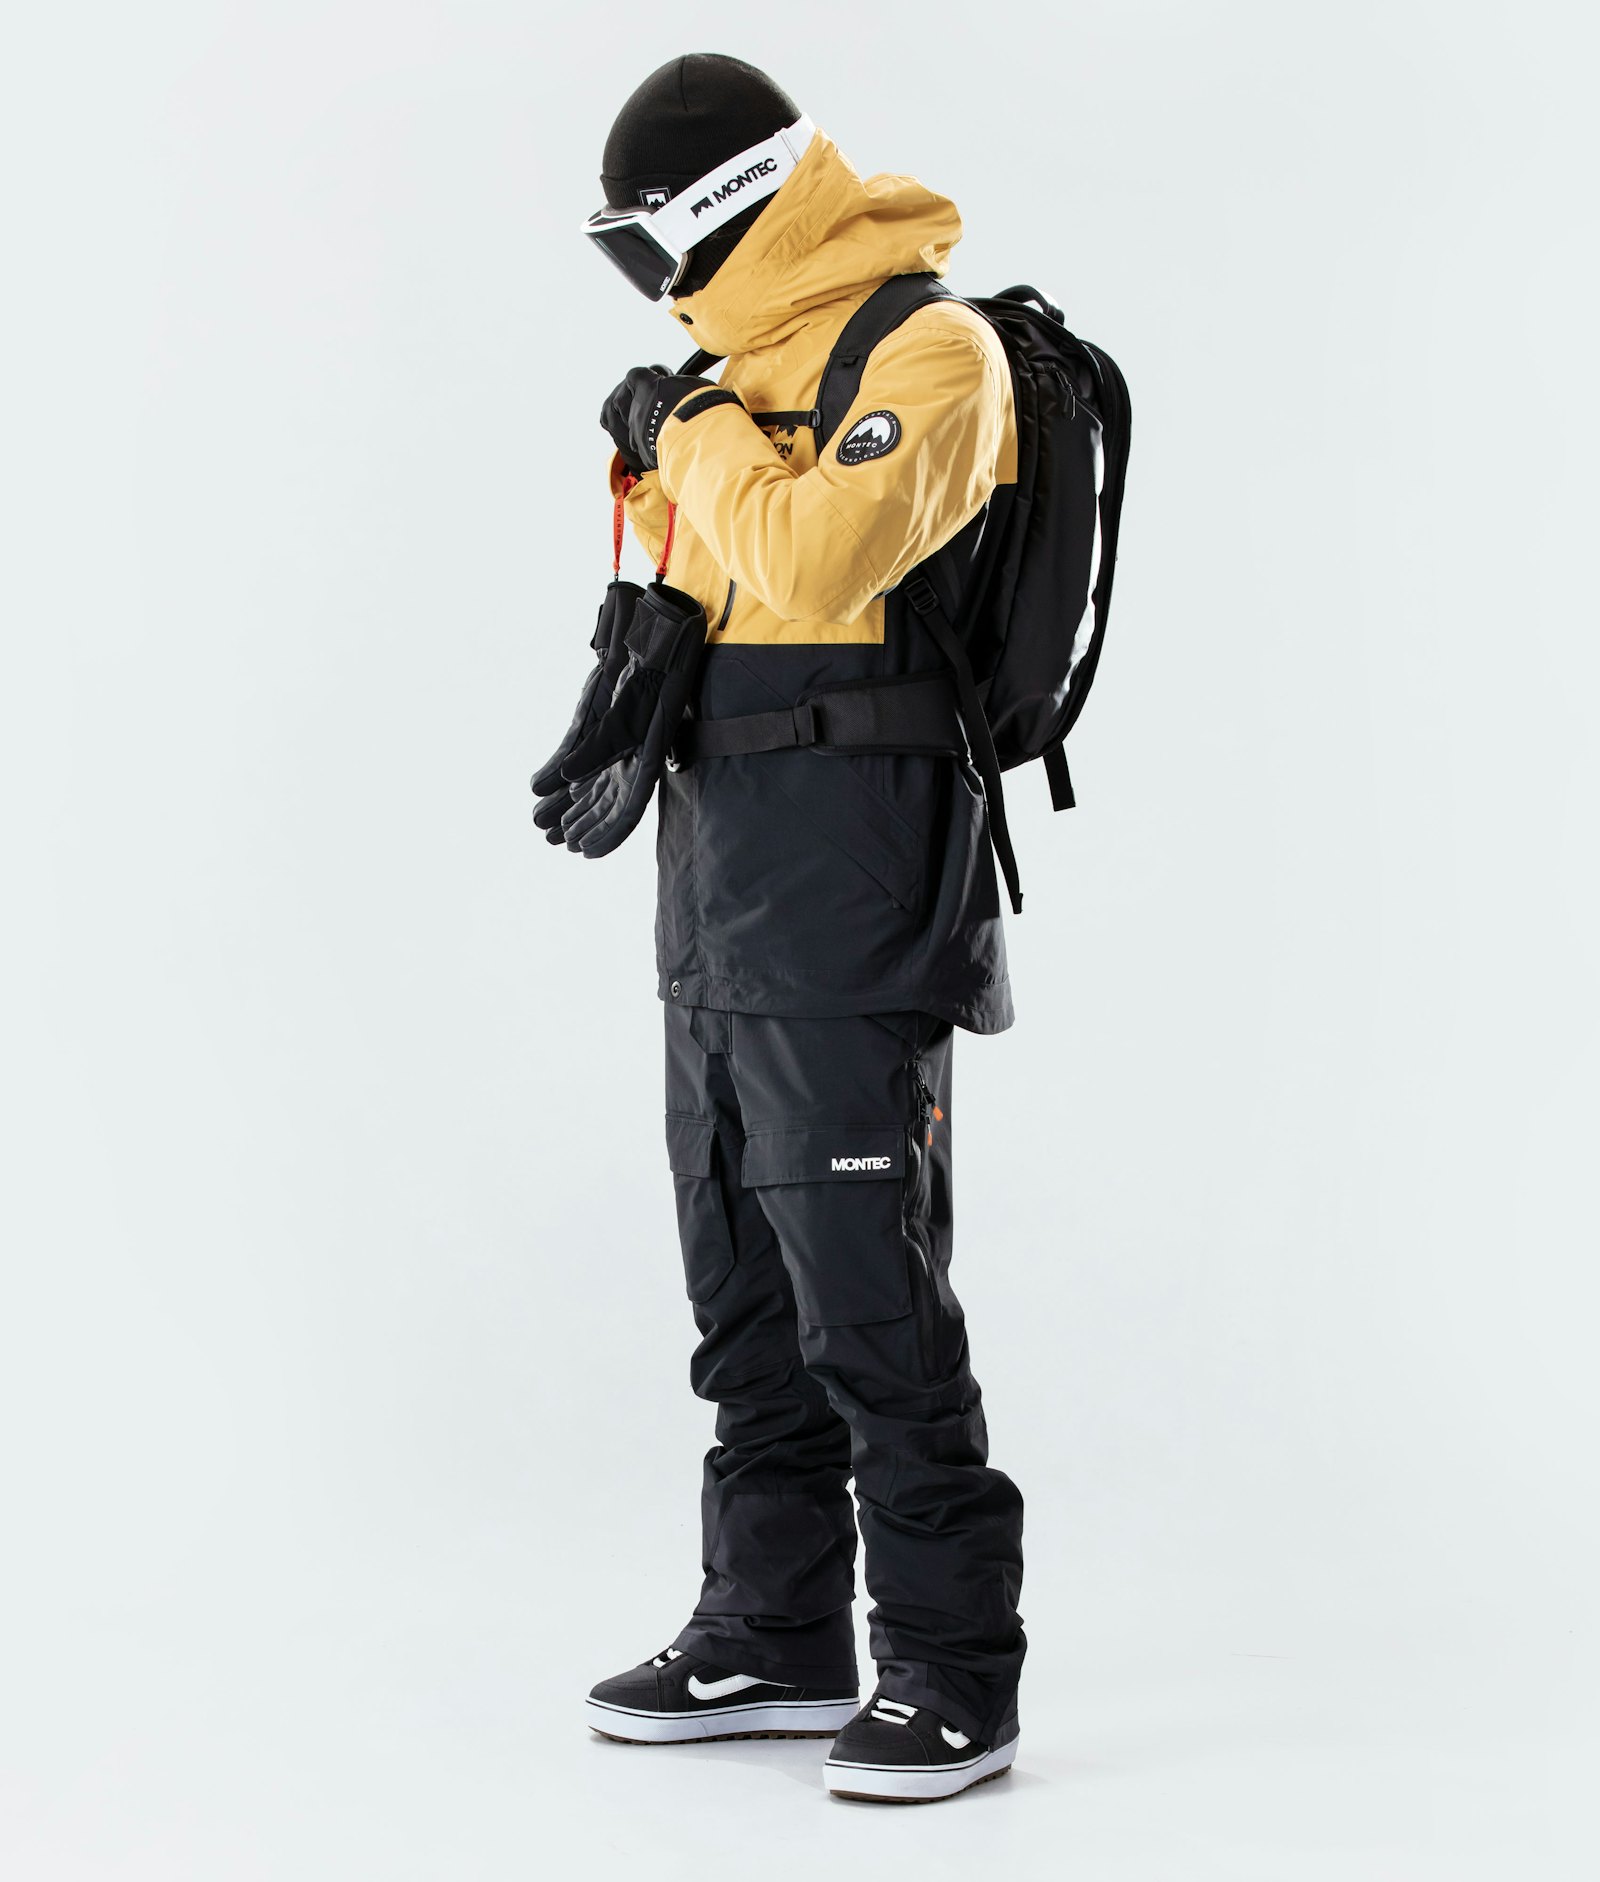 Roc Snowboardjacke Herren Yellow/Black